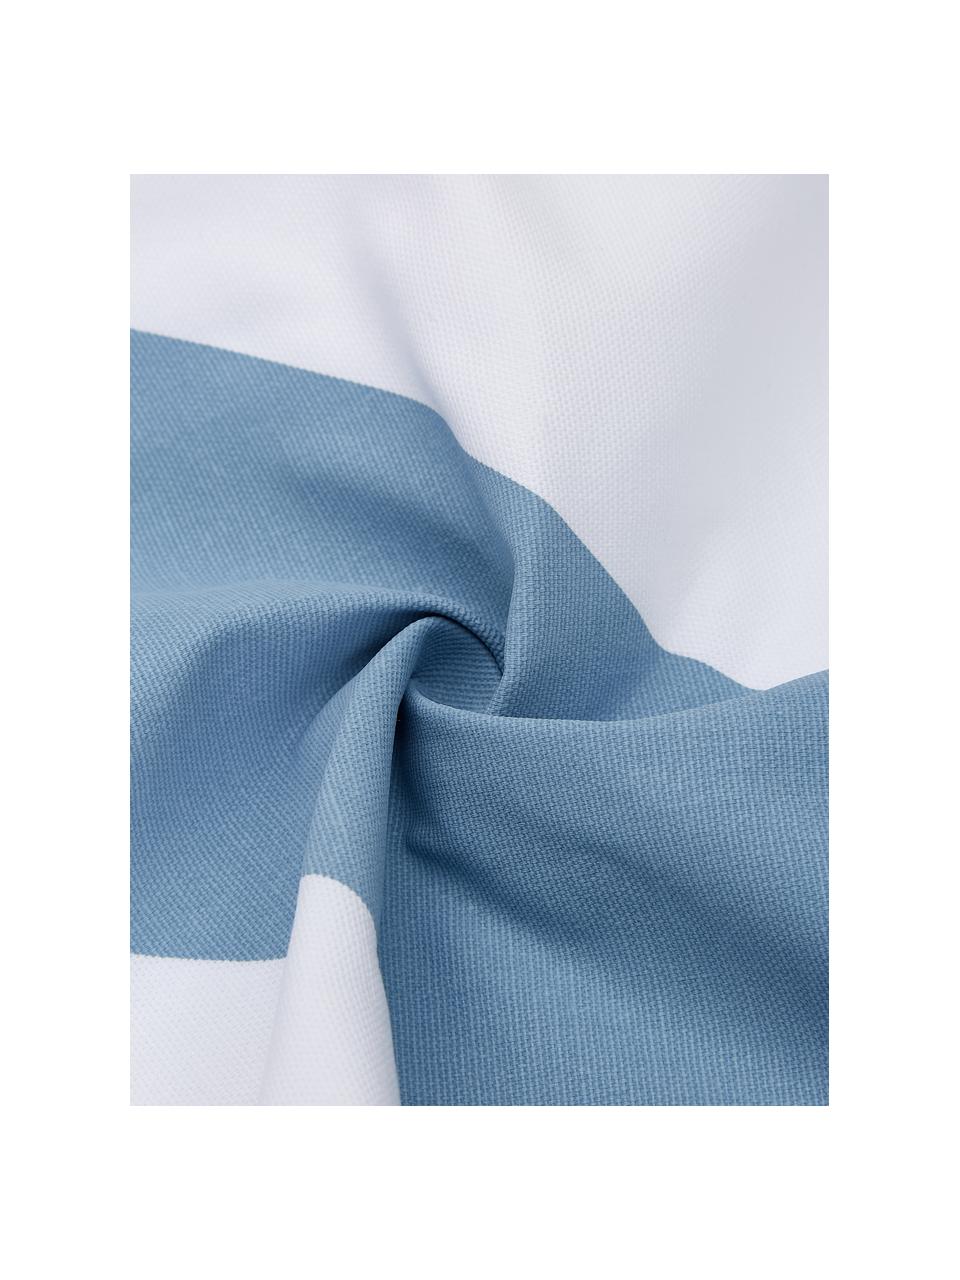 Gestreifte Kissenhülle Ren in Hellblau/White, 100% Baumwolle, Weiß, Hellblau, 30 x 50 cm